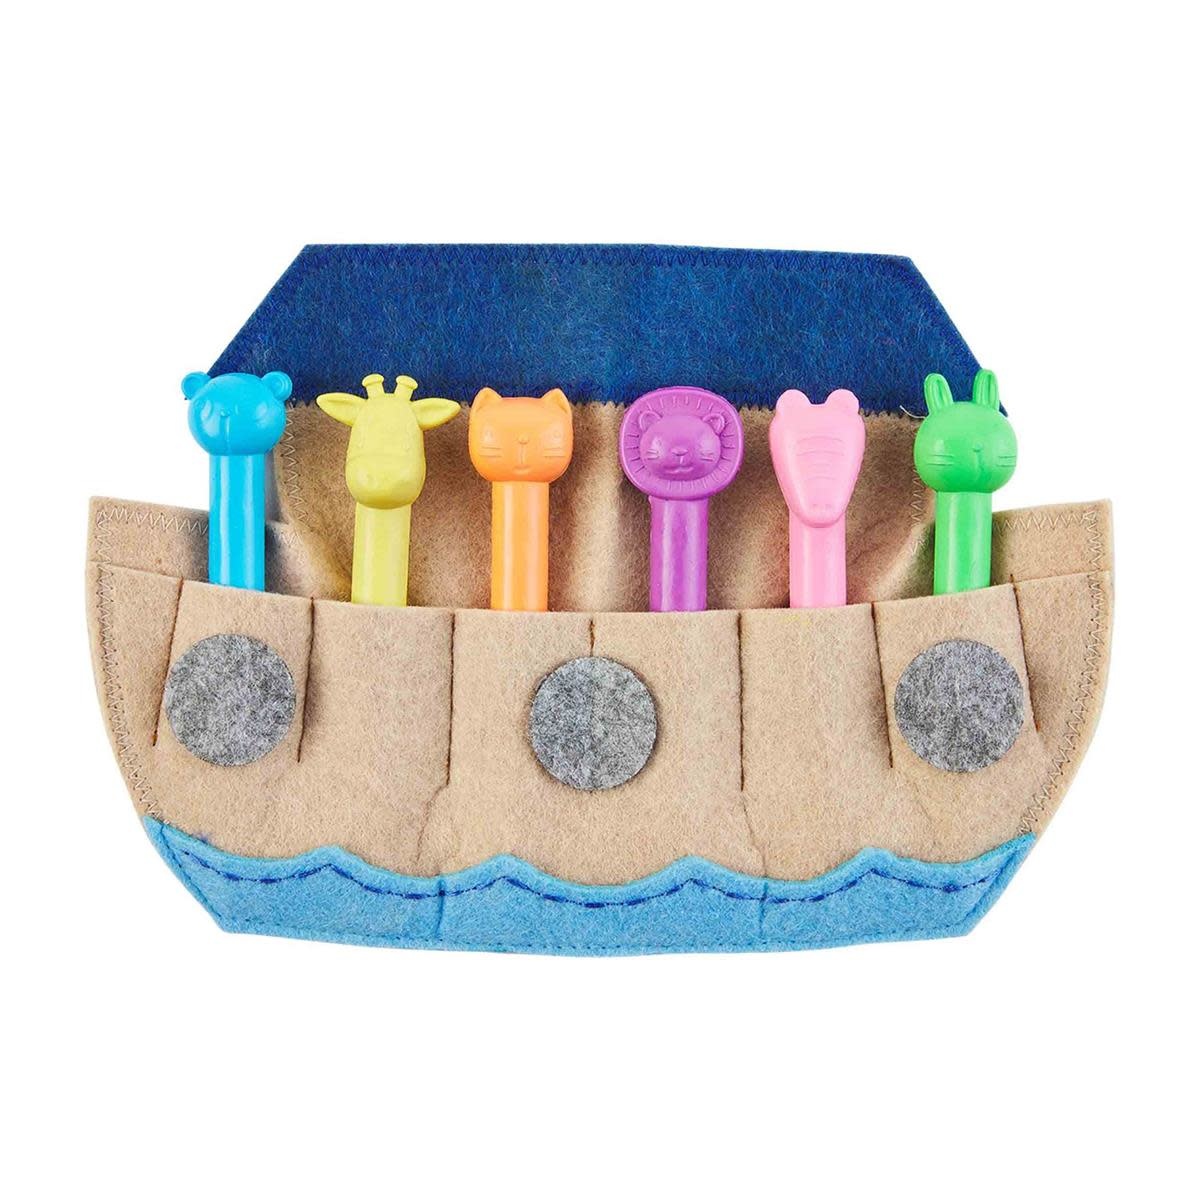 Noah's Ark Crayon Holder Set - The Trendy Trunk